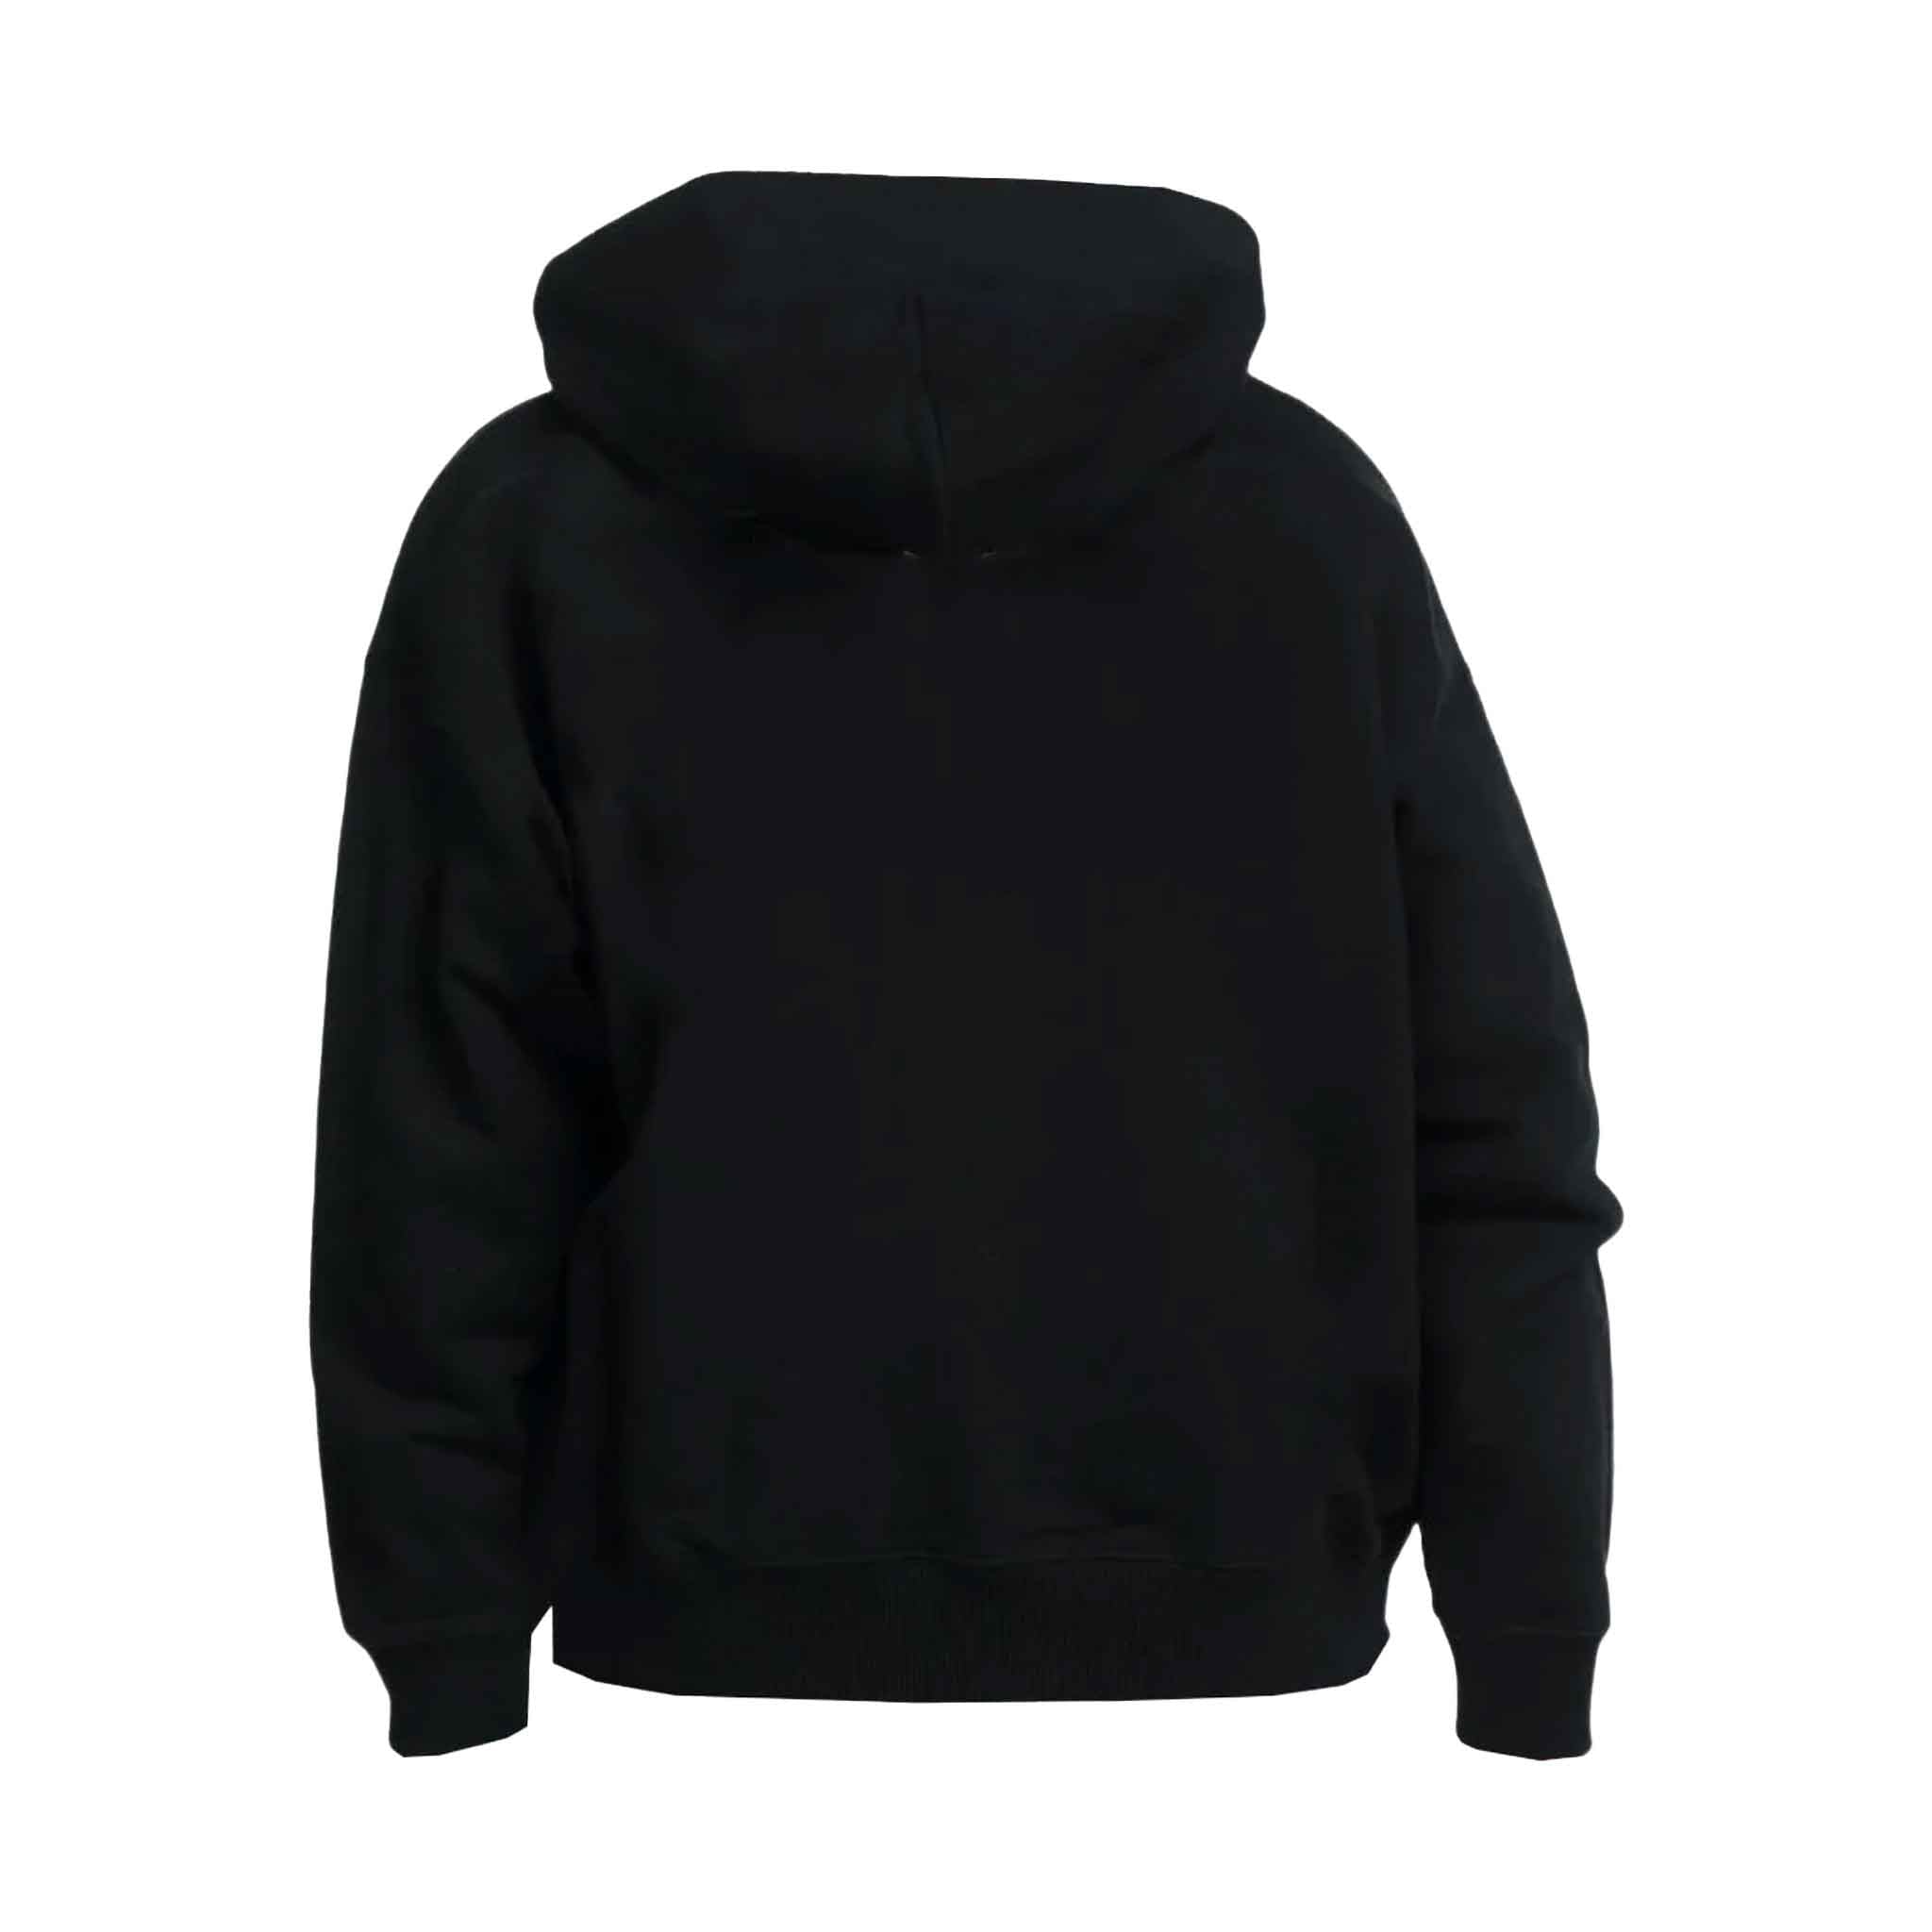 OFF-WHITE Diag Pocket Skate Hoodie in Black